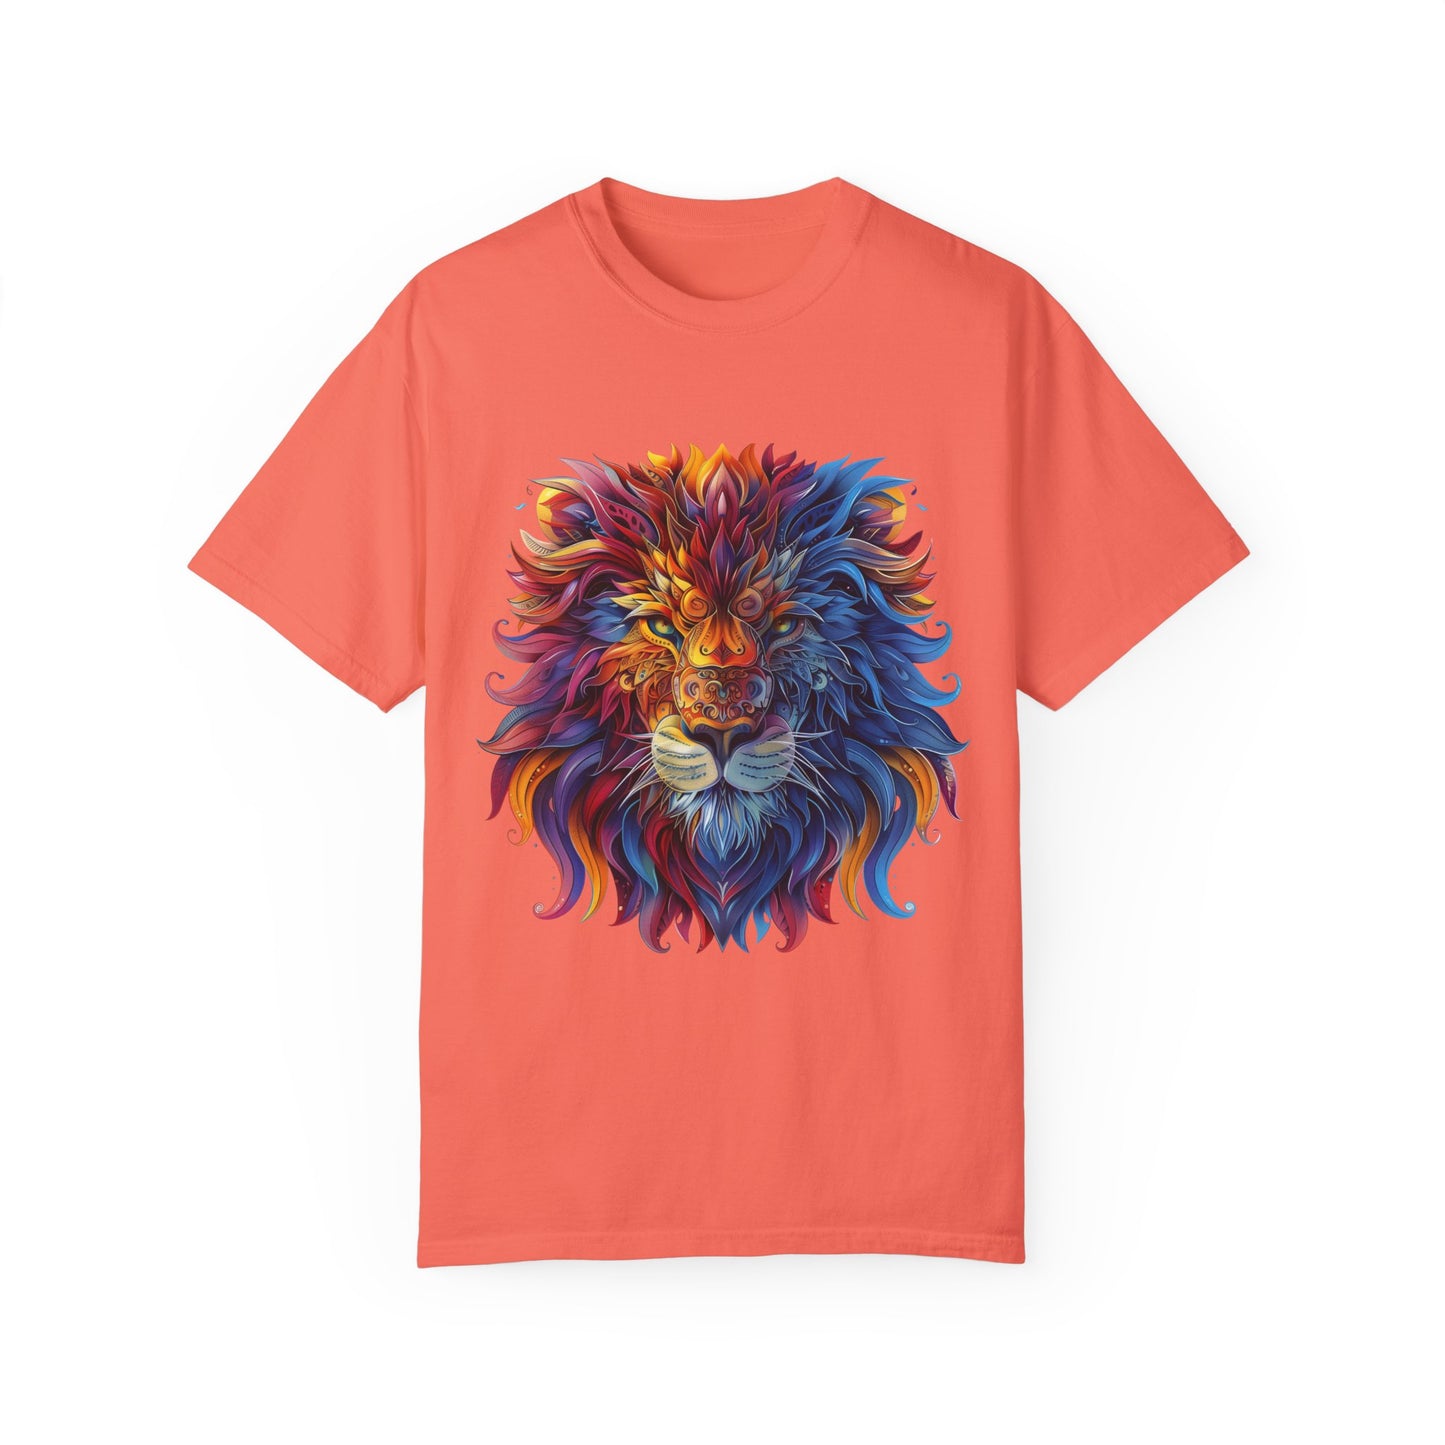 Lion Head Cool Graphic Design Novelty Unisex Garment-dyed T-shirt Cotton Funny Humorous Graphic Soft Premium Unisex Men Women Bright Salmon T-shirt Birthday Gift-6